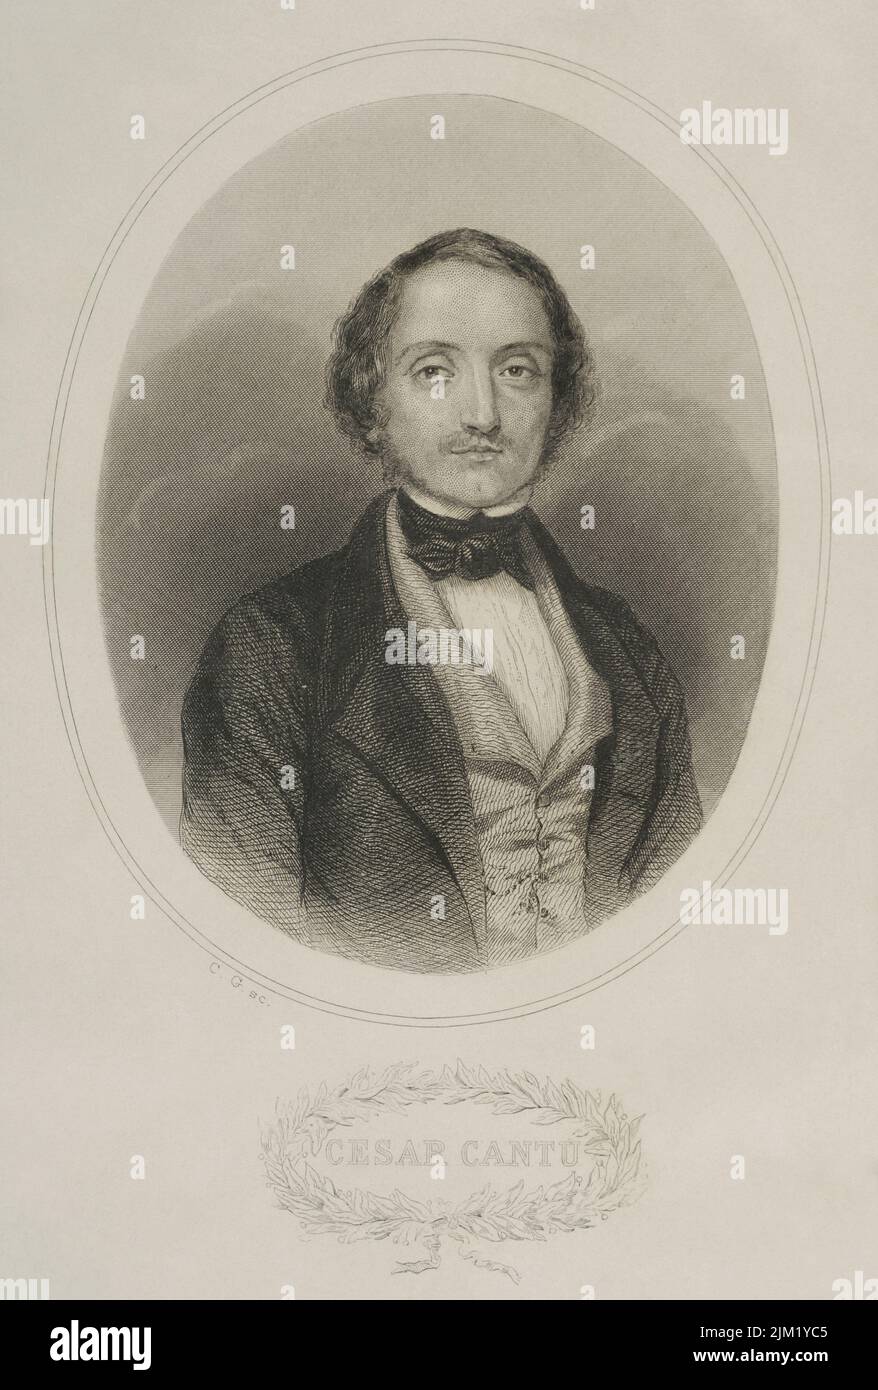 Cesare Cantù (1804-1895). Italian historian and writer. Portrait. Engraving. 'Historia Universal' by César Cantú. Volume I, 1854. Stock Photo